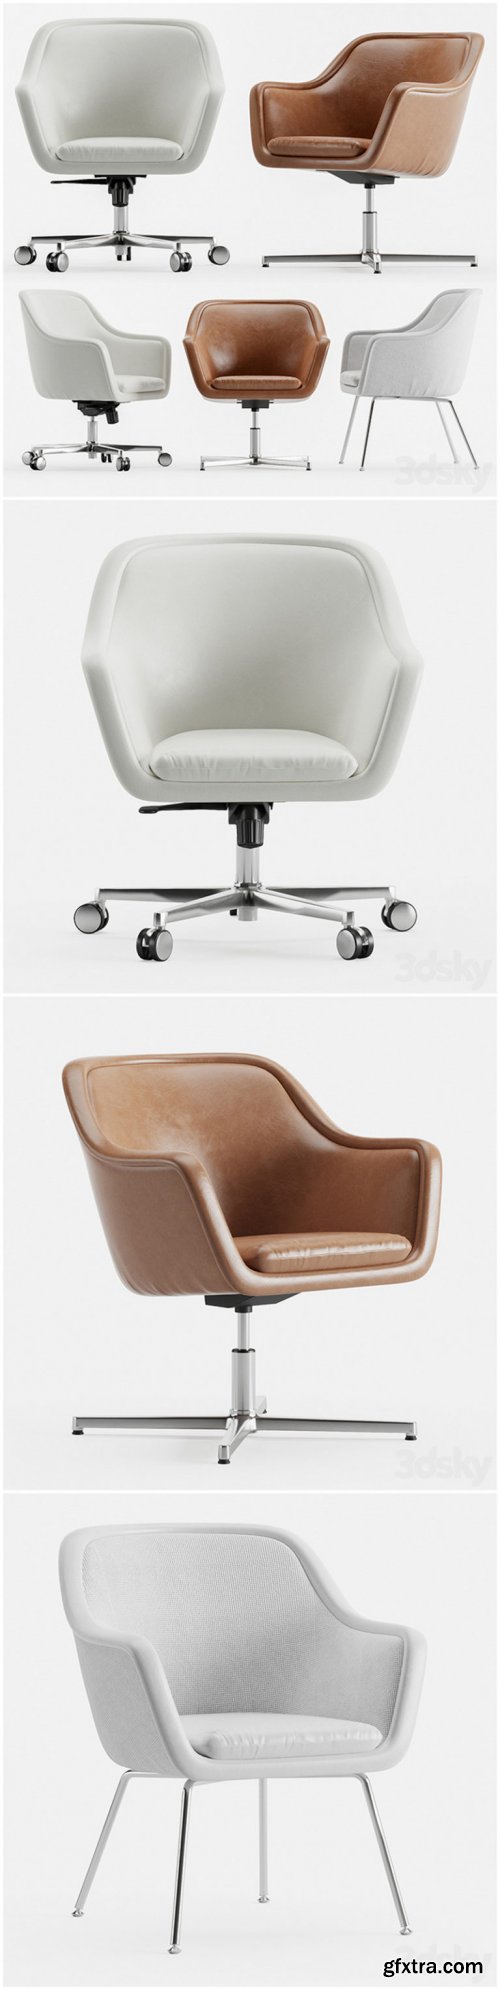 Bumper chair by HermanMiller